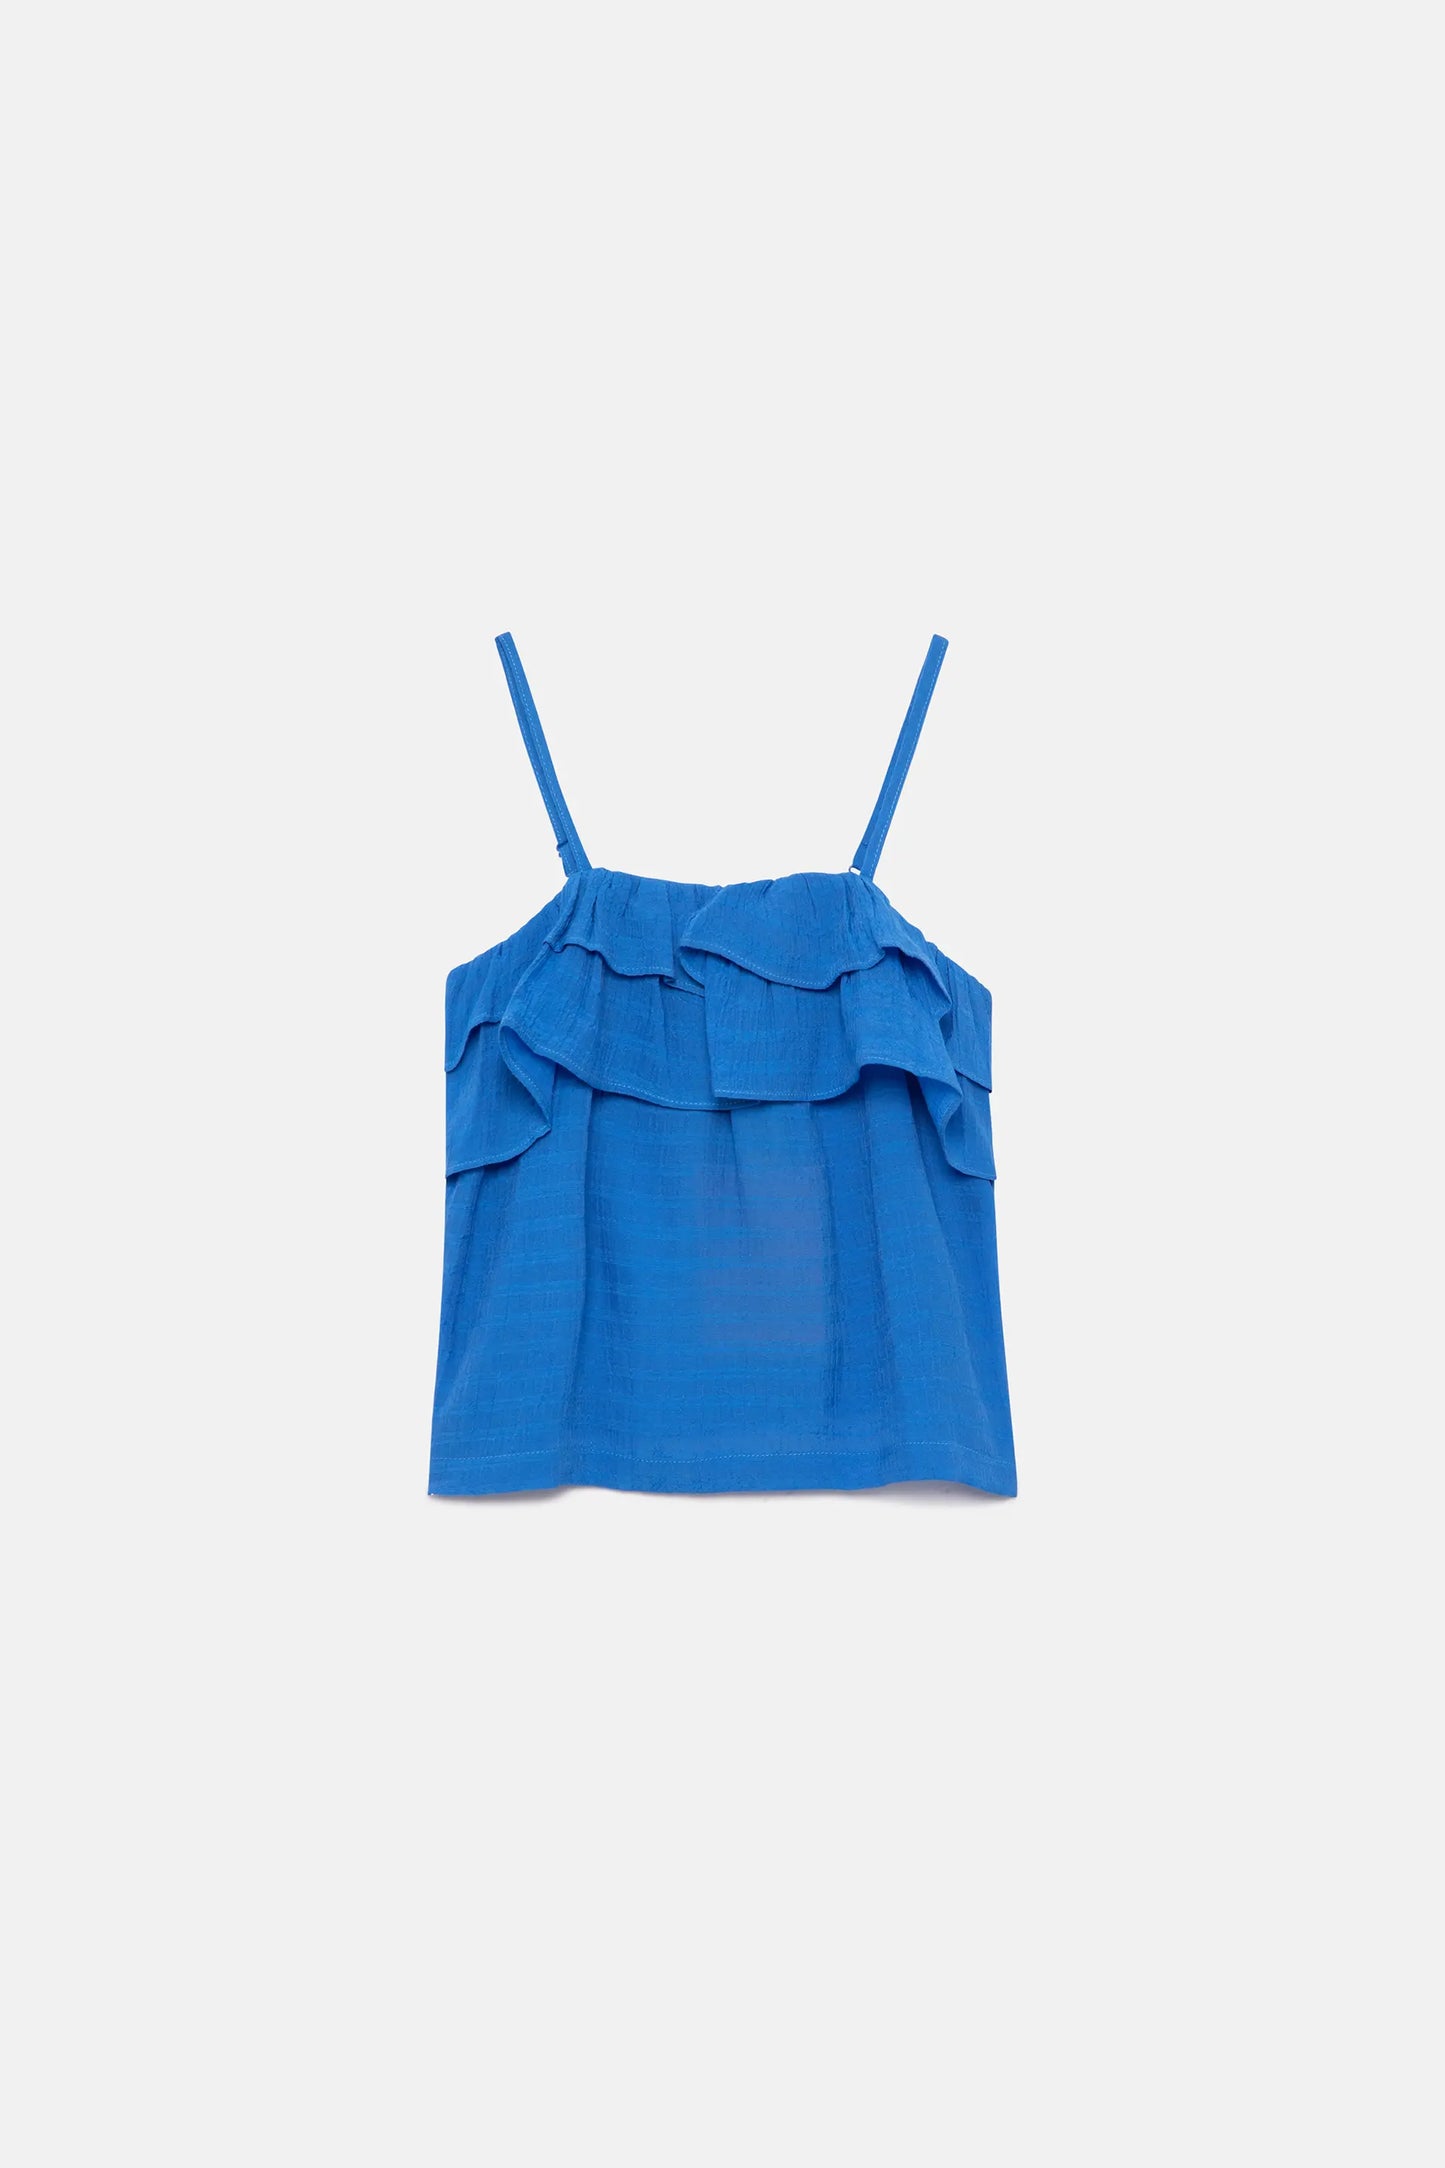 Girl's blue strapless top